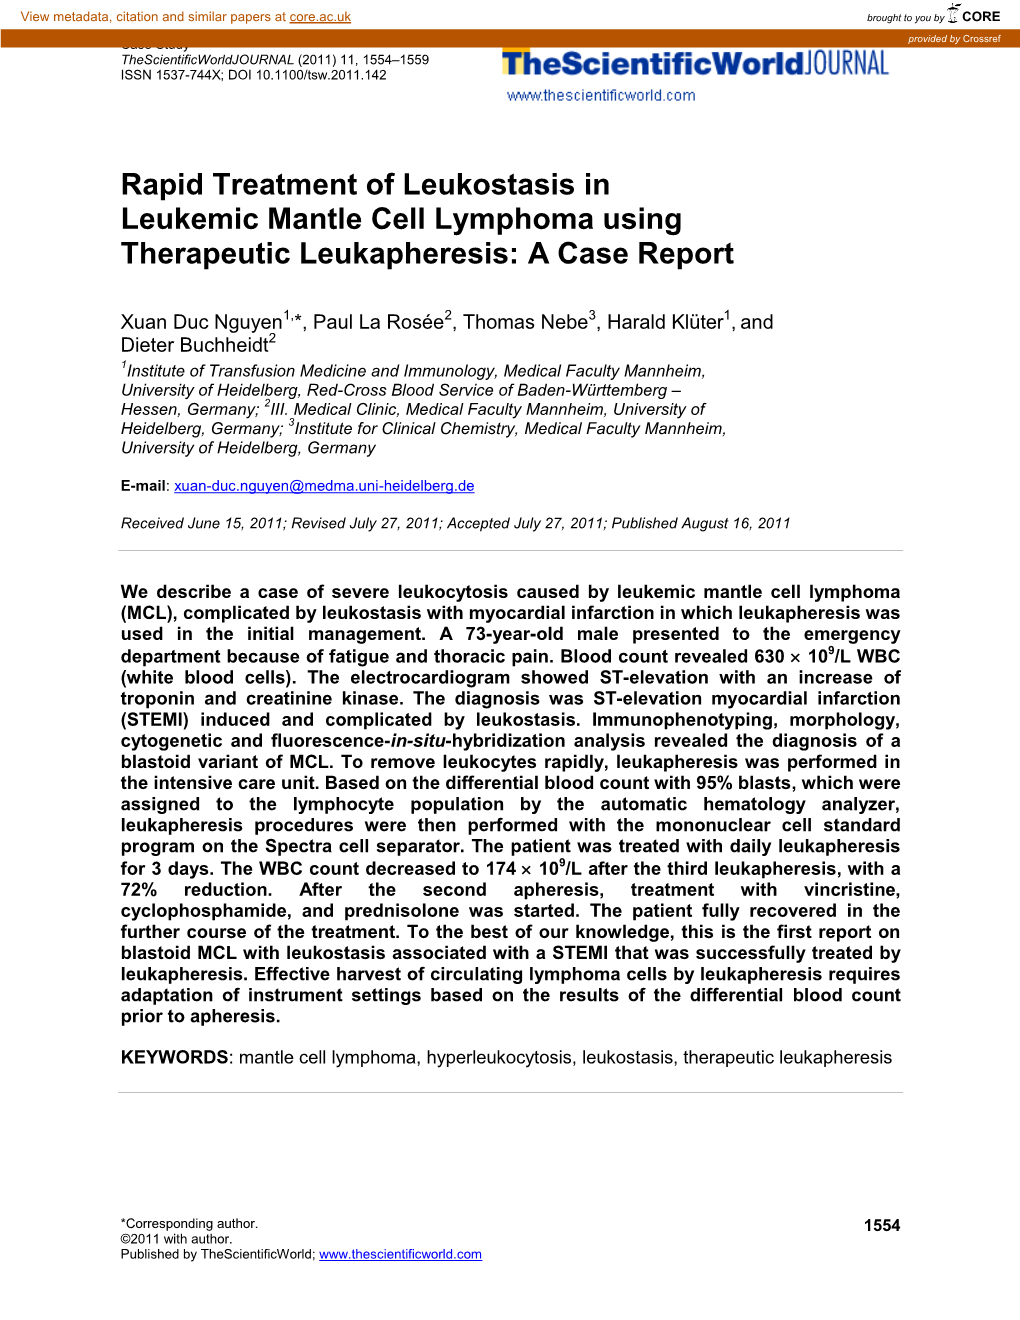 Rapid Treatment of Leukostasis in Leukemic Mantle Cell Lymphoma Using Therapeutic Leukapheresis: a Case Report